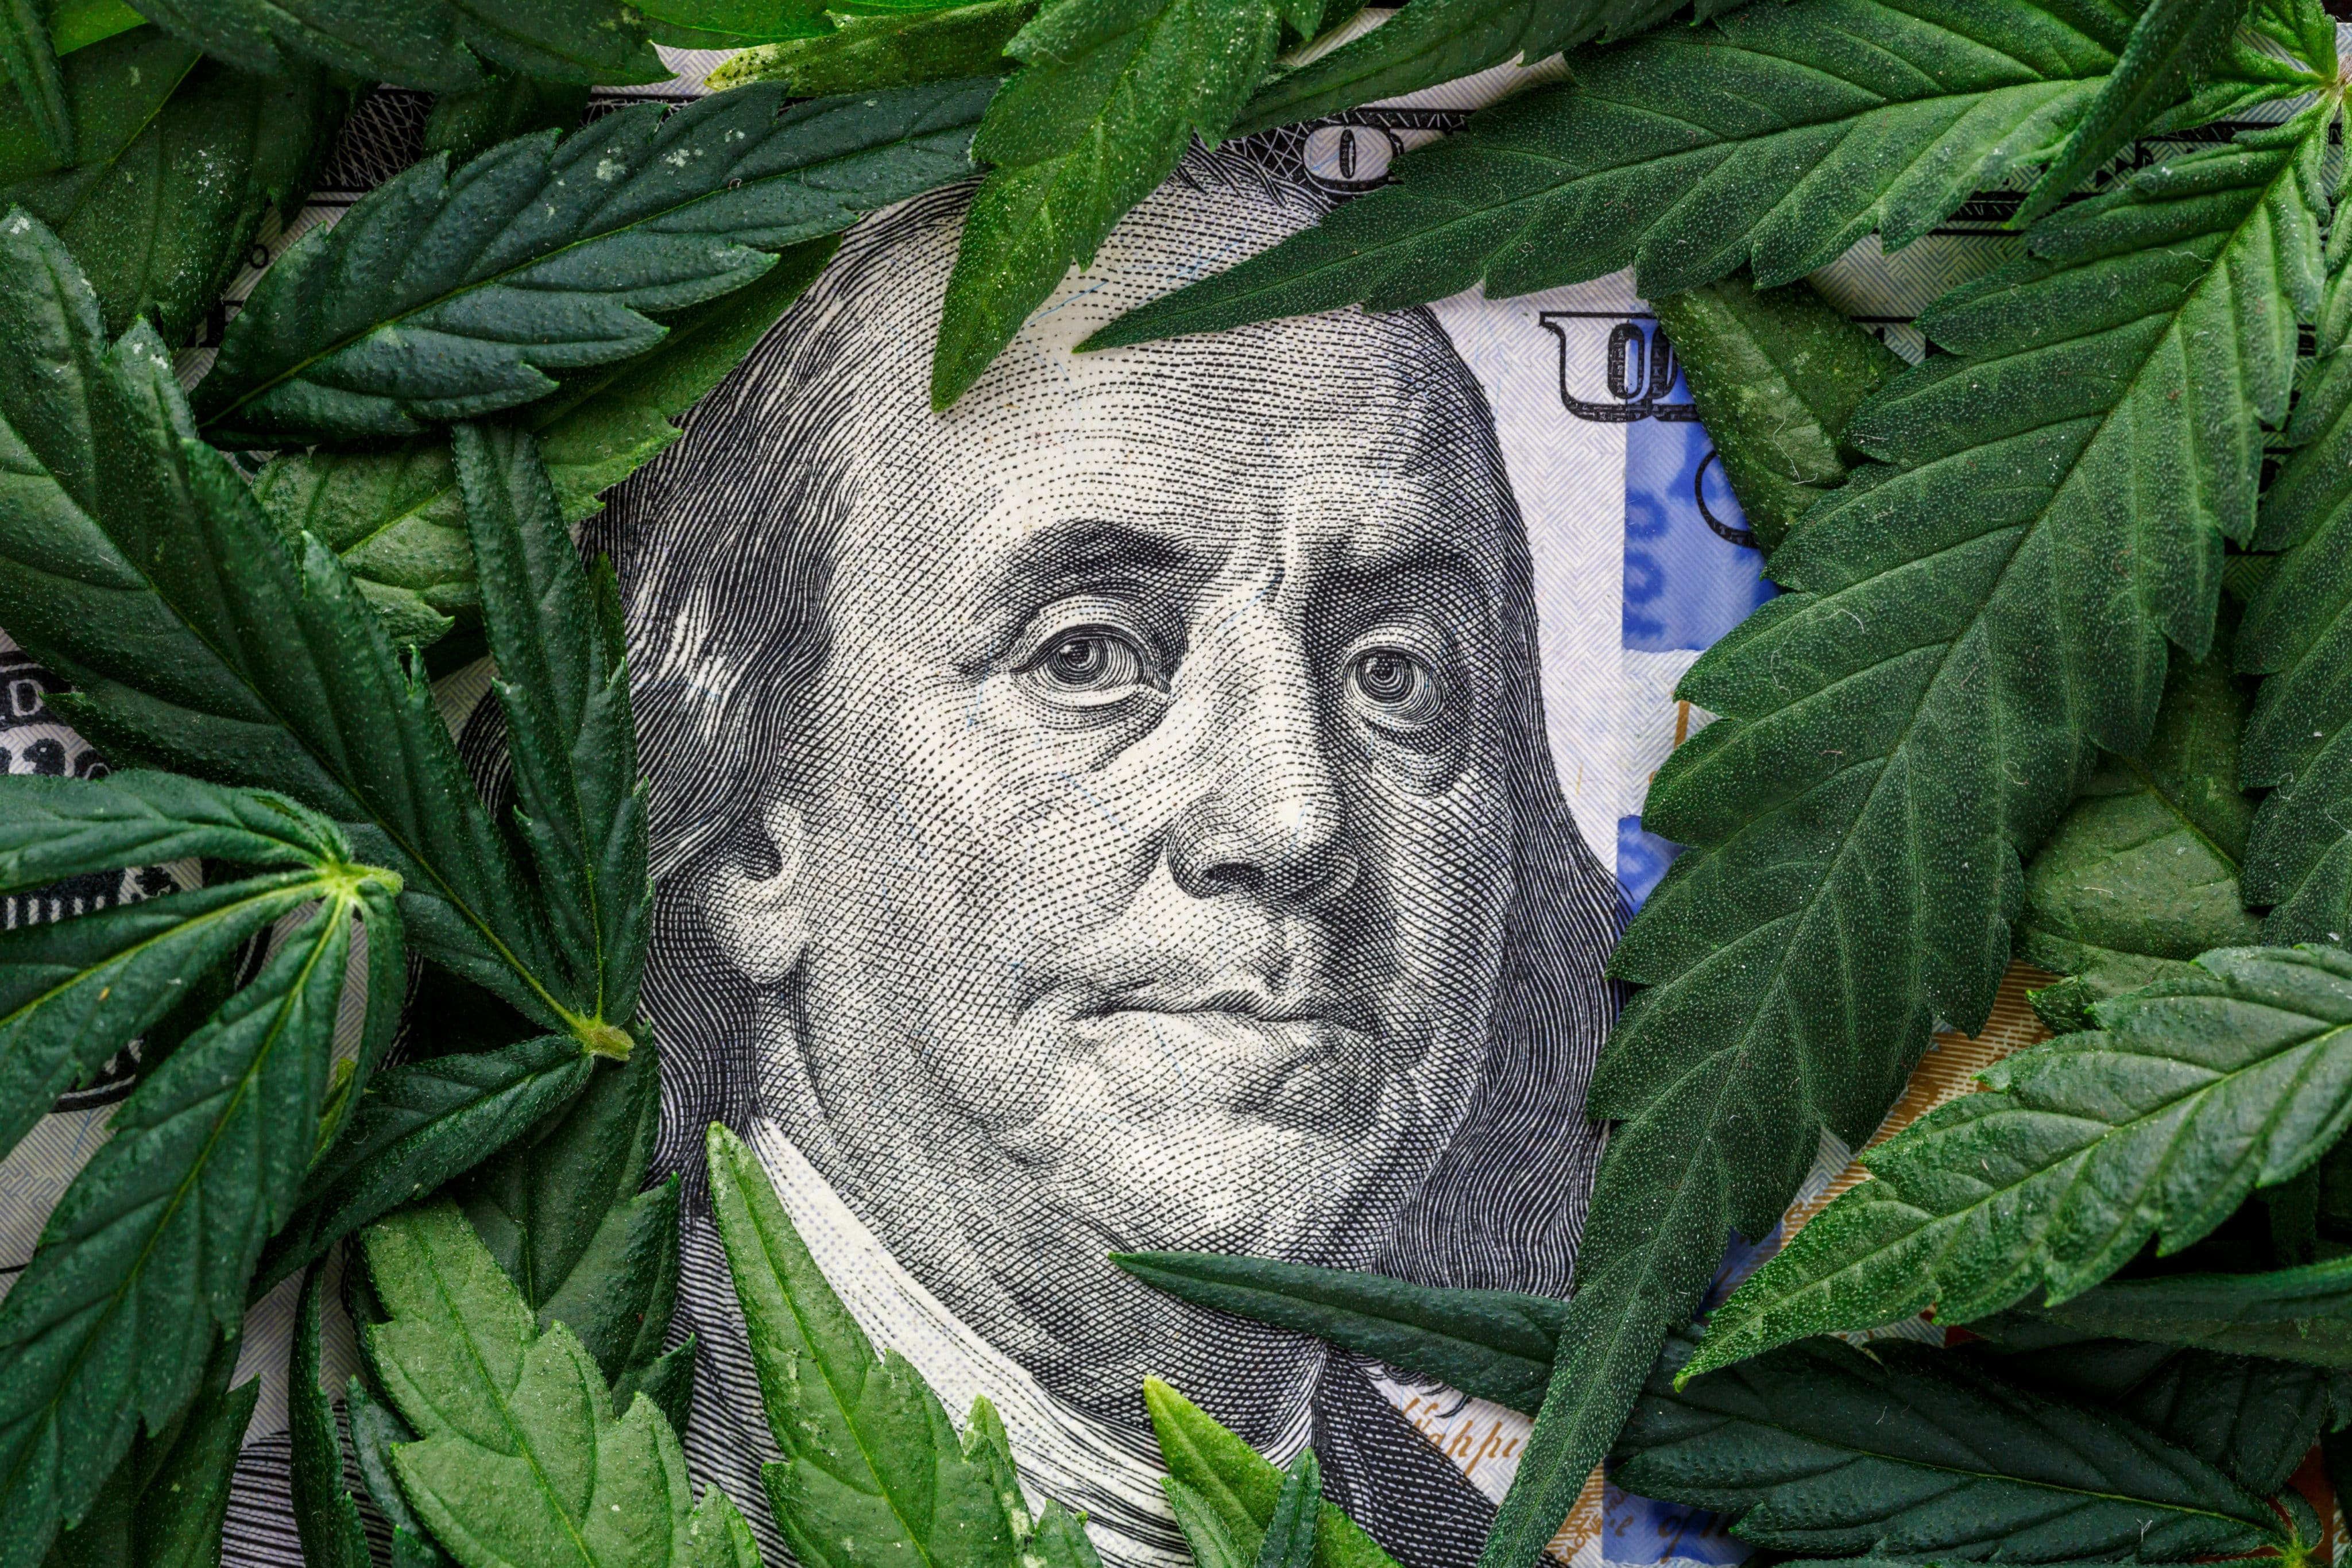 California Uses Cannabis Tax Revenue to Grant $35.5 Million to Community Organizations